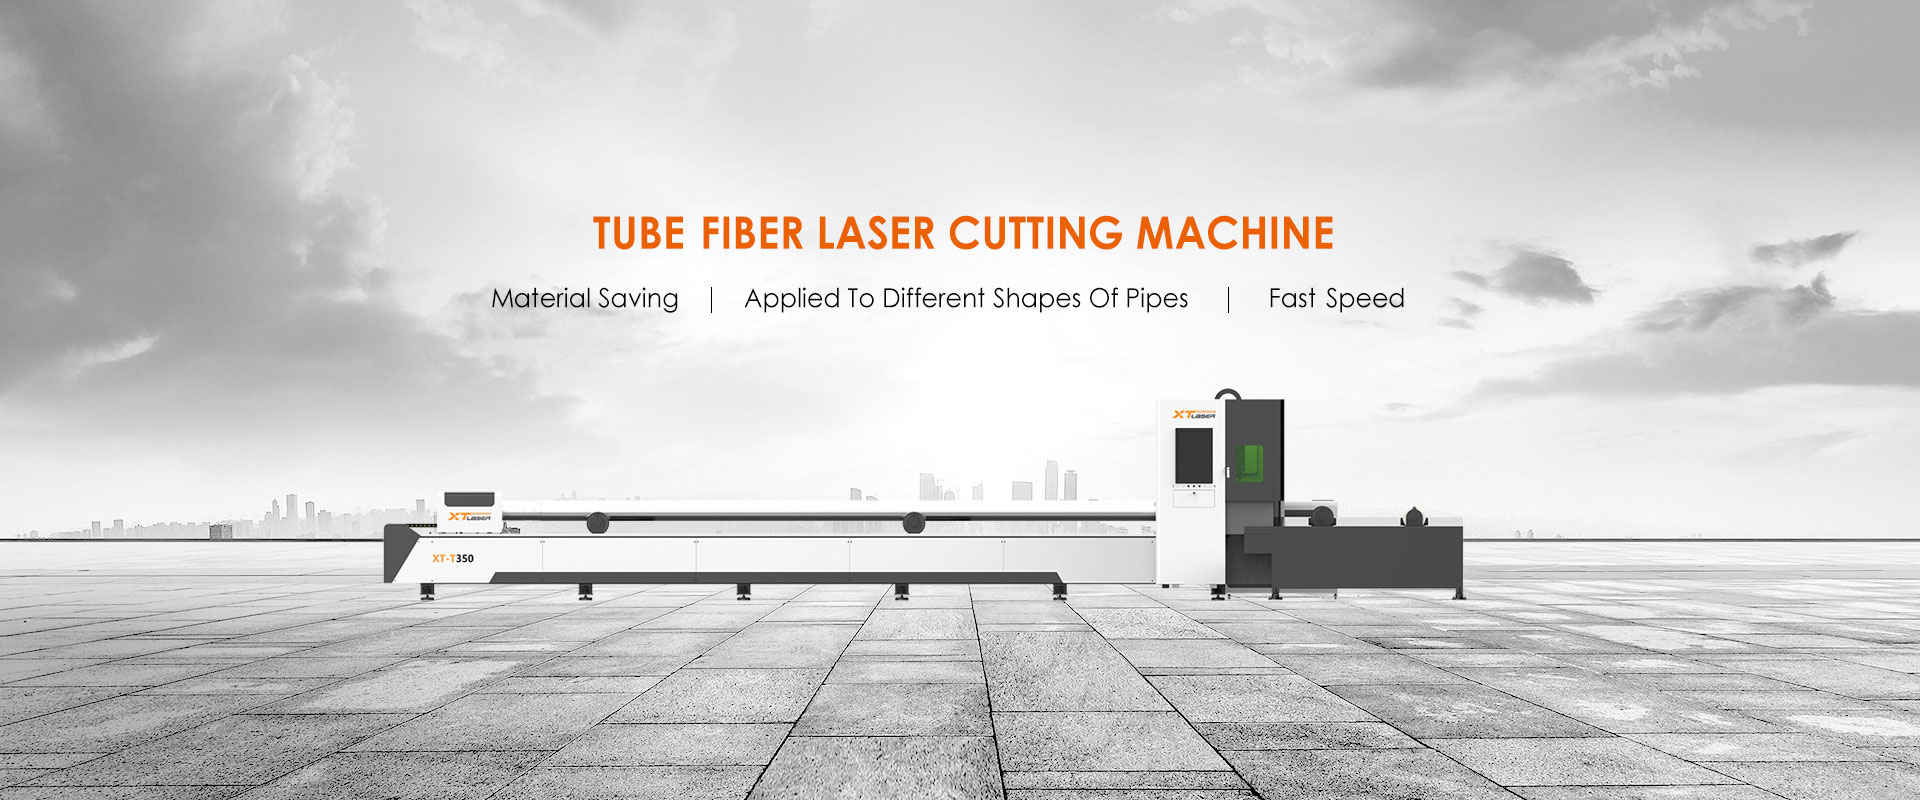 China Tube Fiber Laser Cutting Machine Leverandører